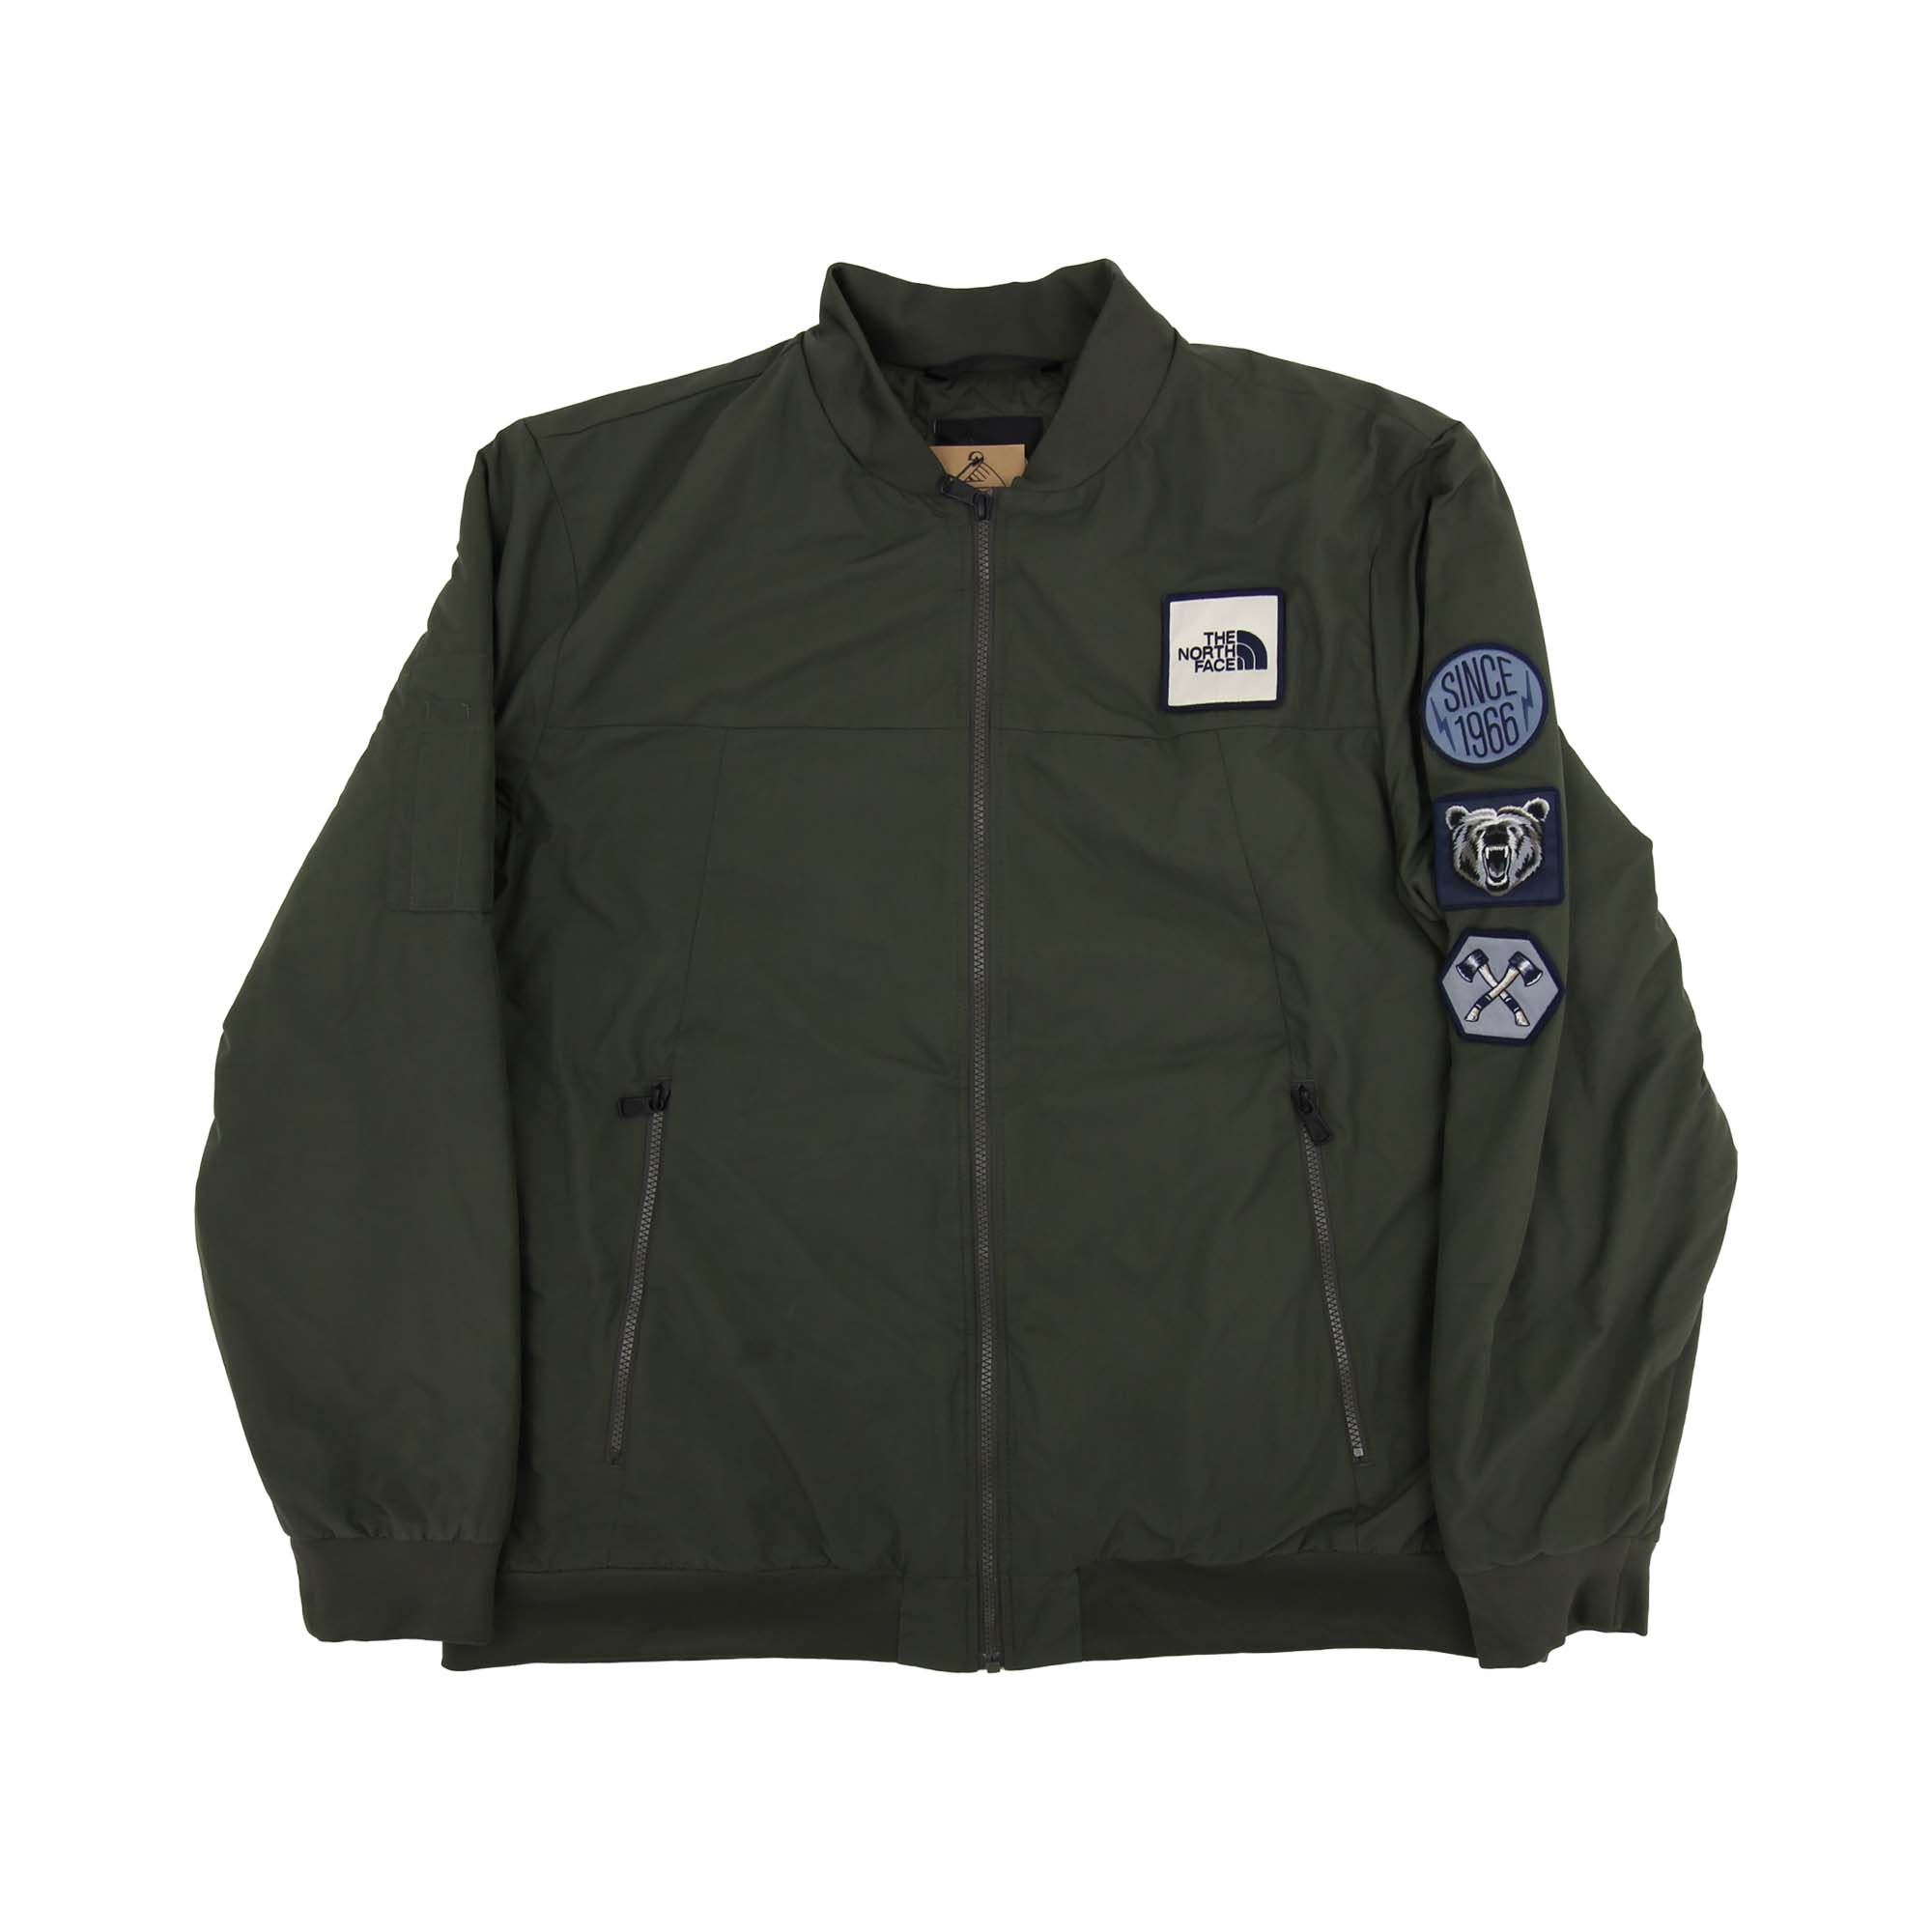 The North Face Vintage Warm Jacket - XL